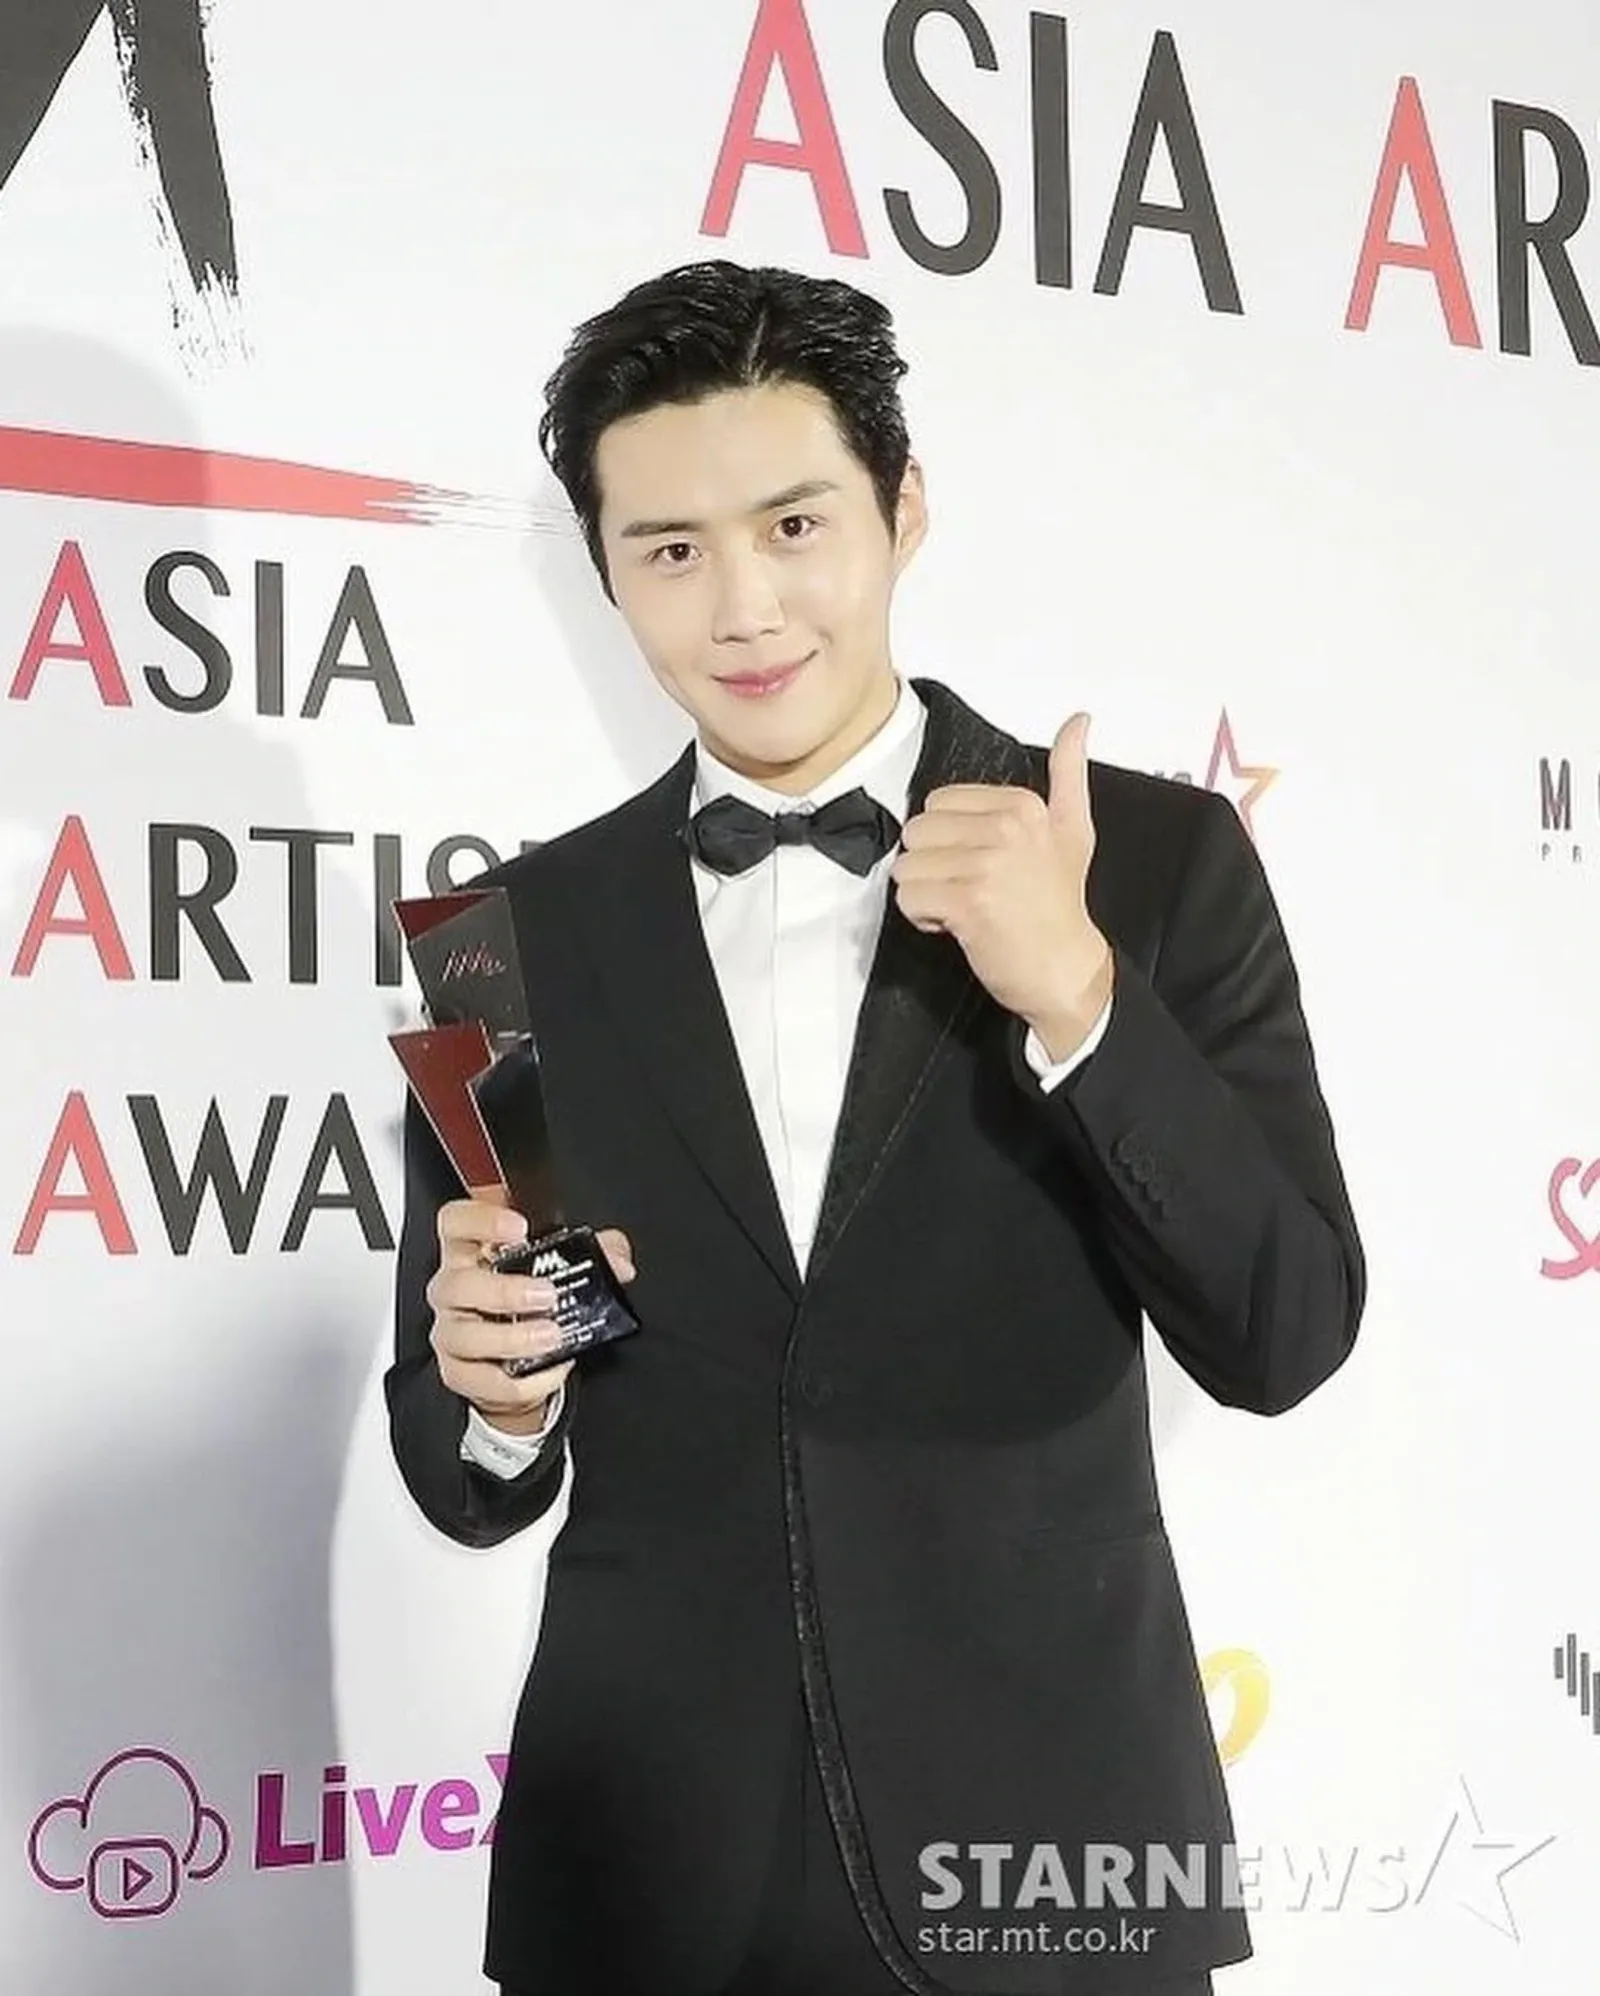 5 Gaya Terbaik di Asia Artist Awards 2020